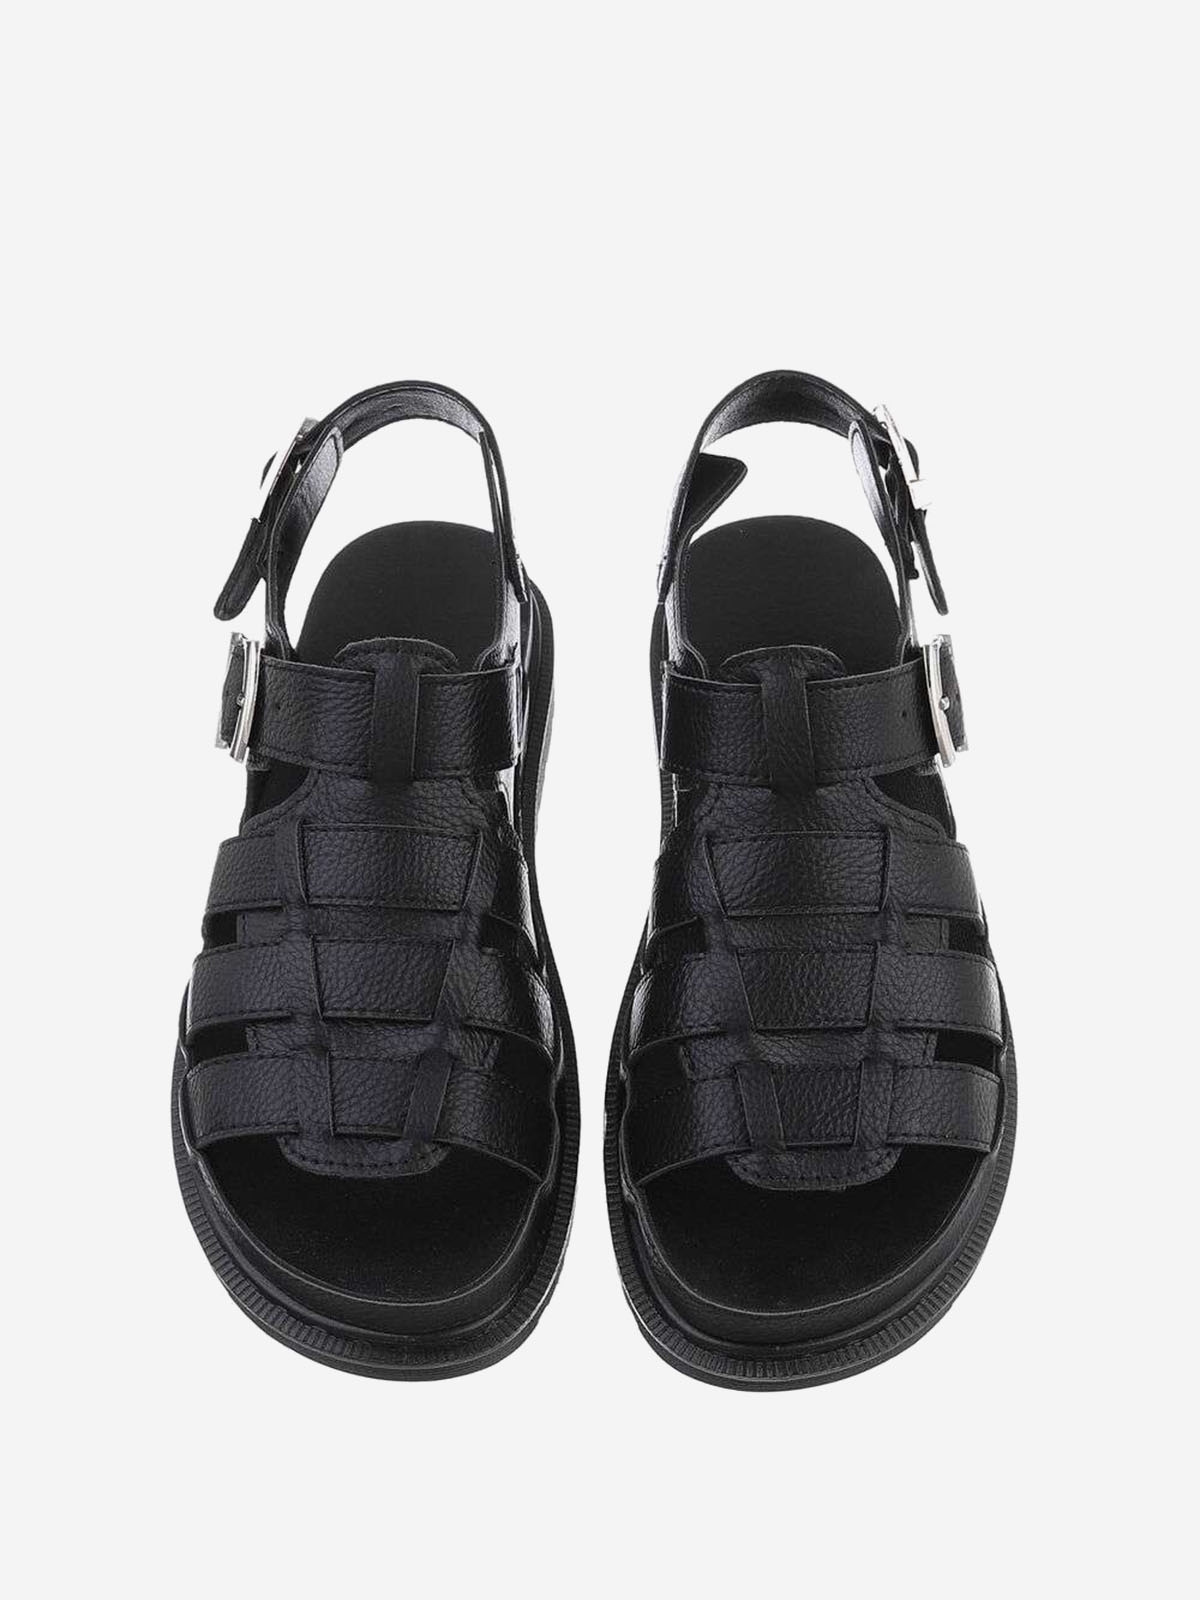 Sandals with adjustable straps in black